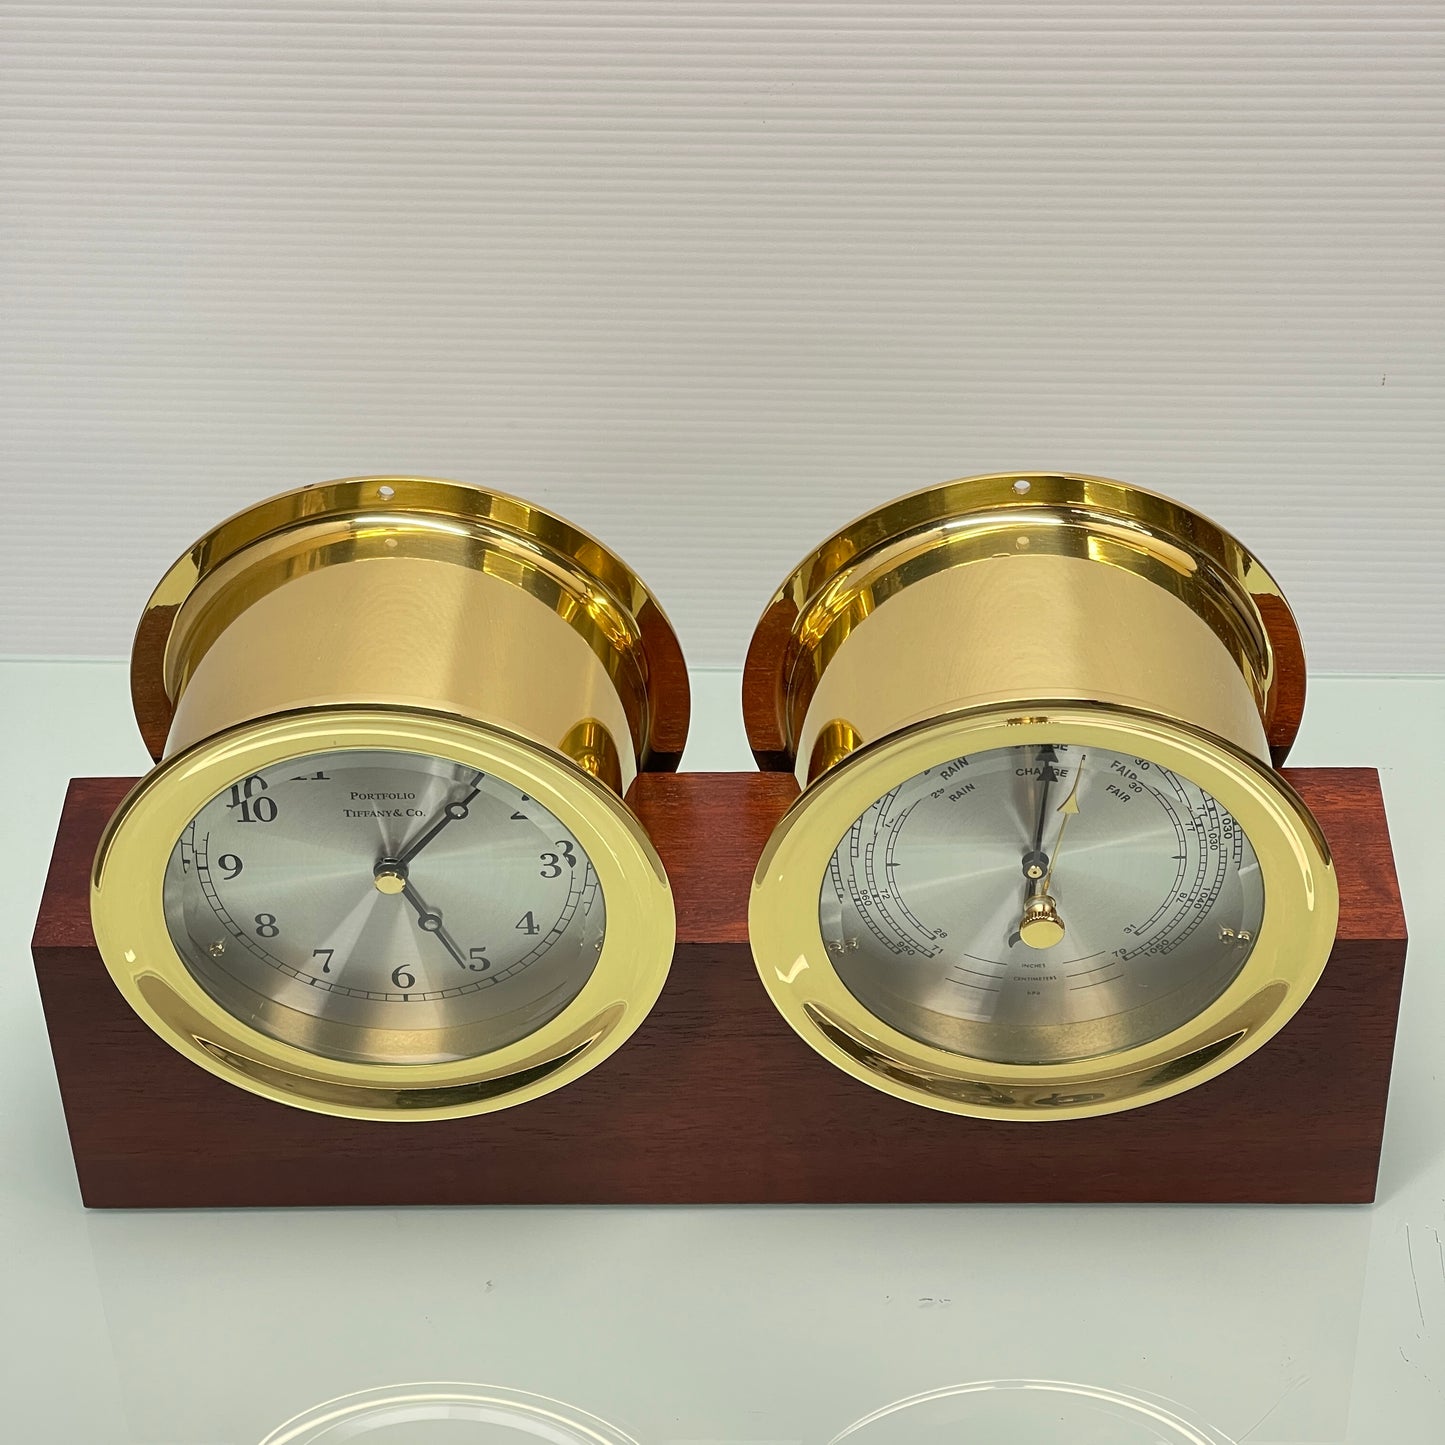 Tiffany & Co. Ship Clock and Barometer Set with Mahogany Base, Box, Bags and Warranty Booklet